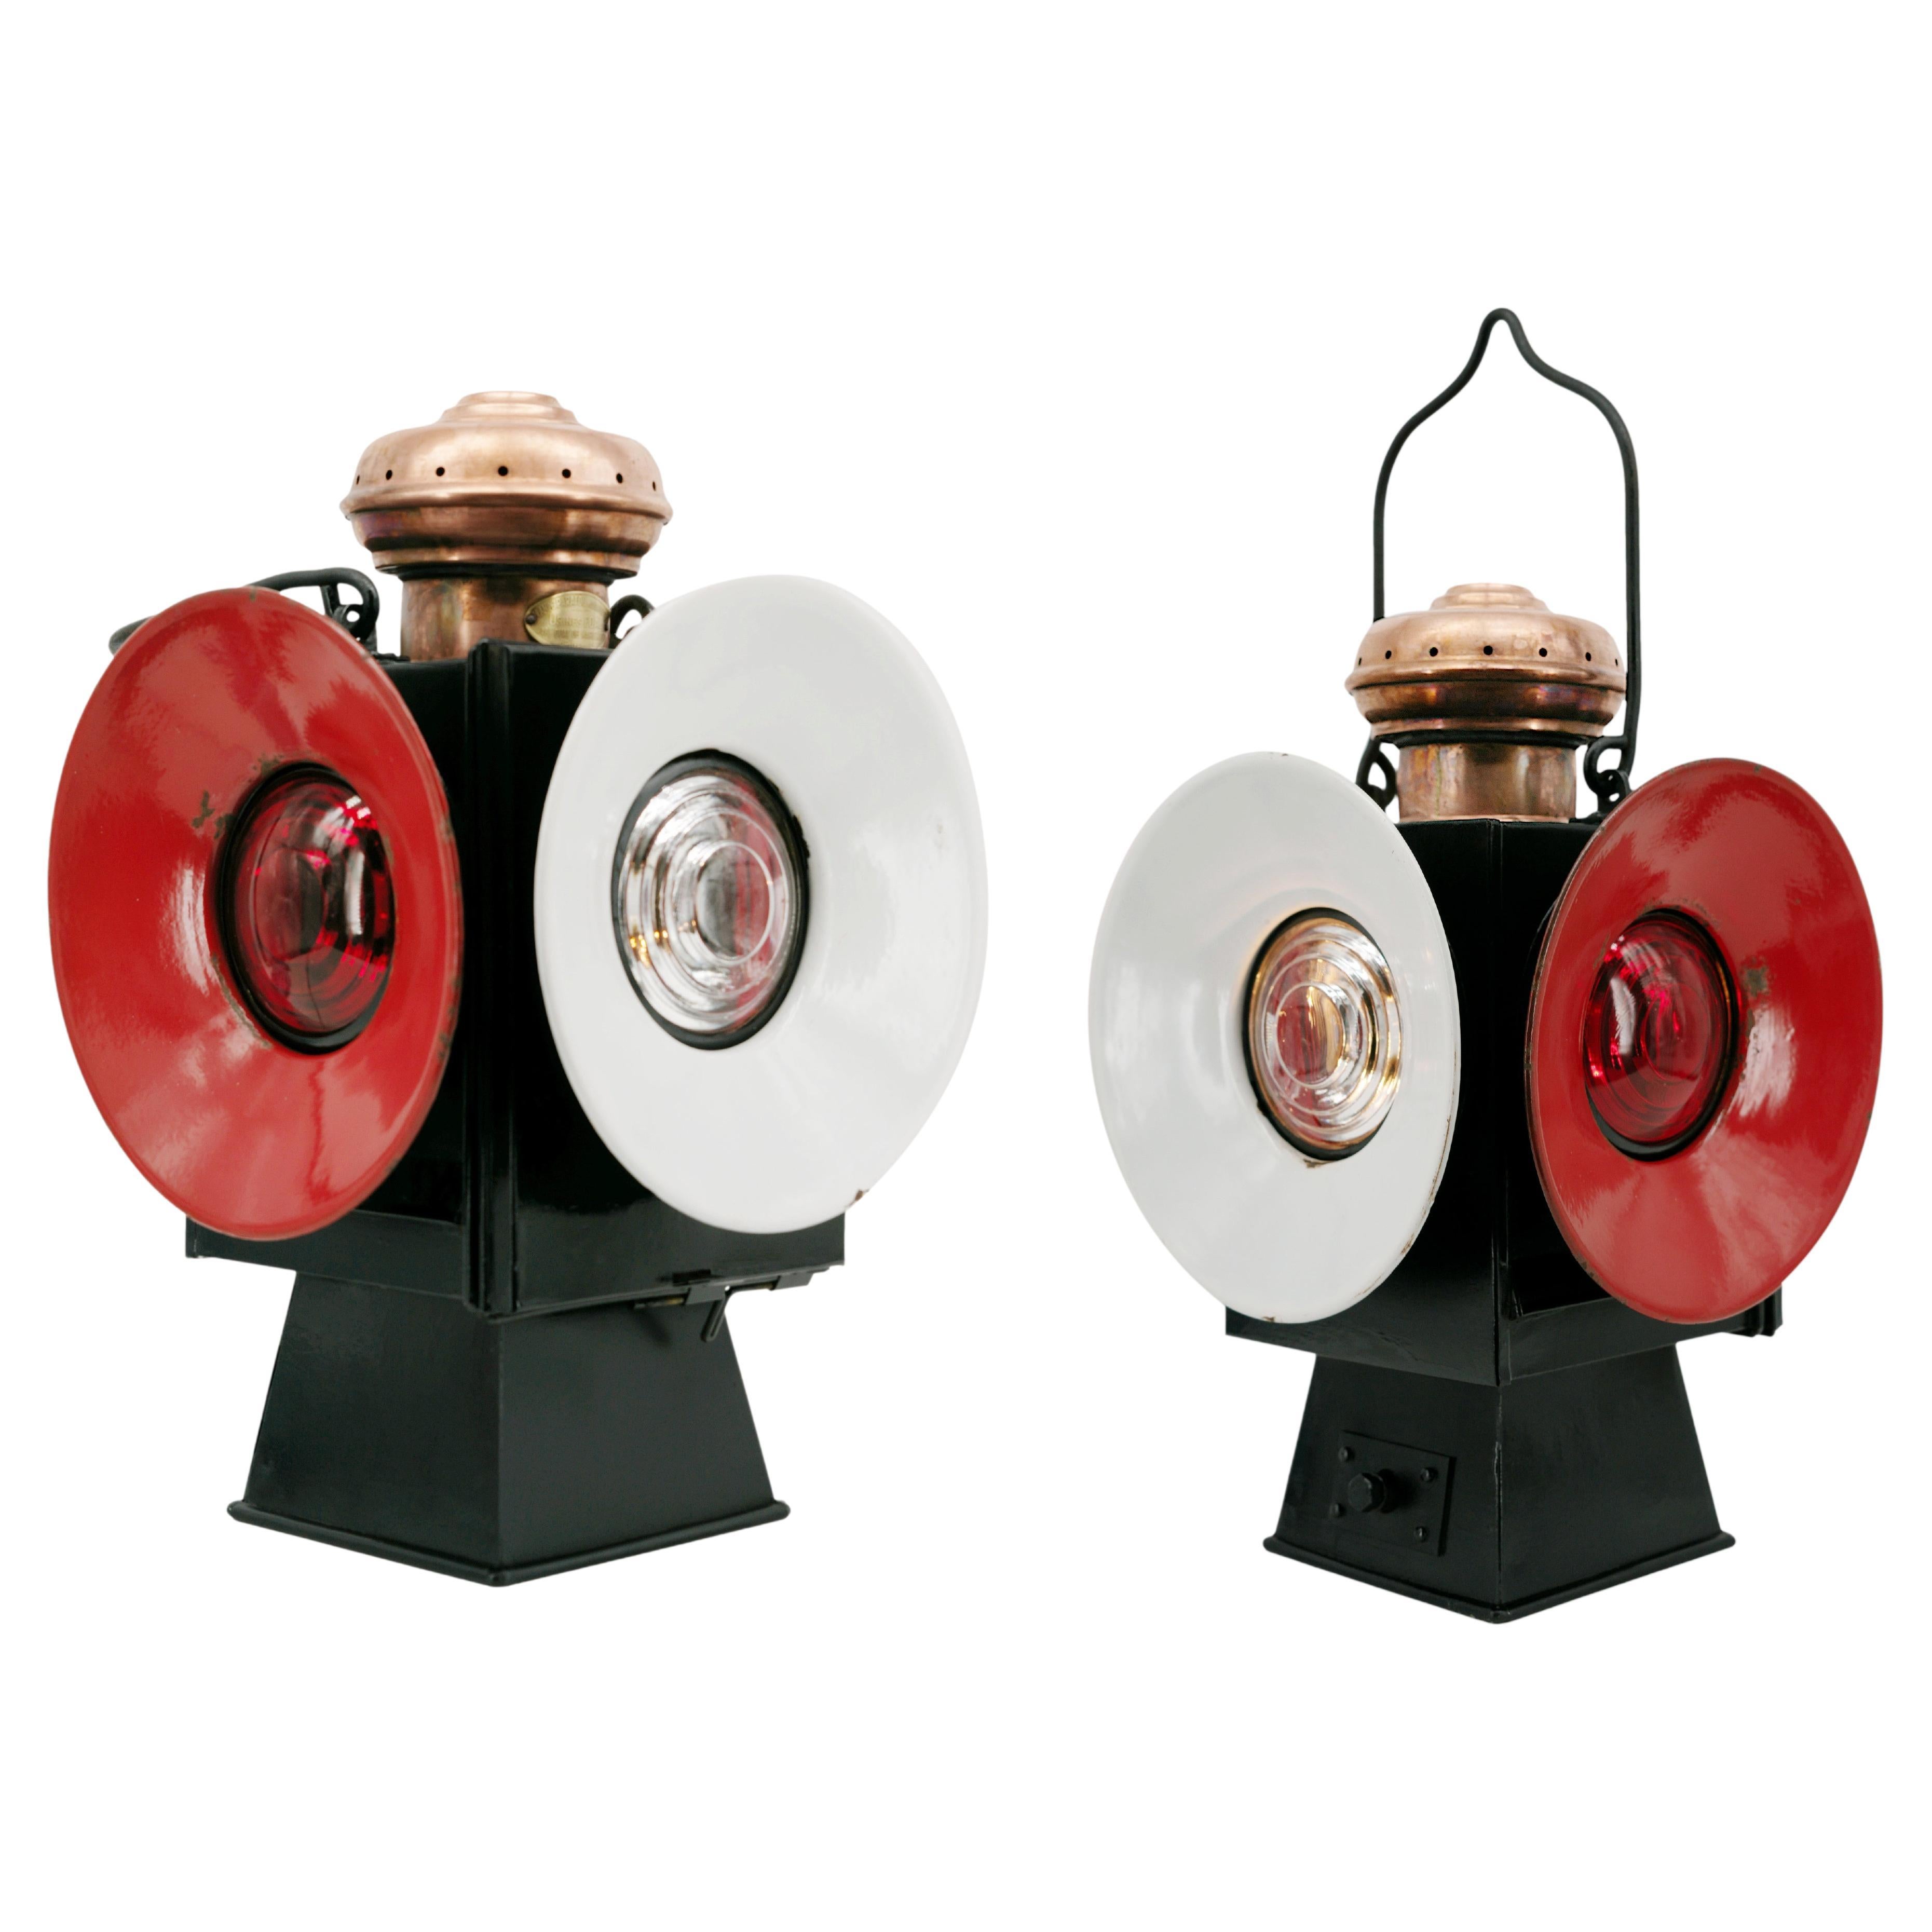 Art Deco Enameled Railway Table lamp or Lantern, 1920s For Sale